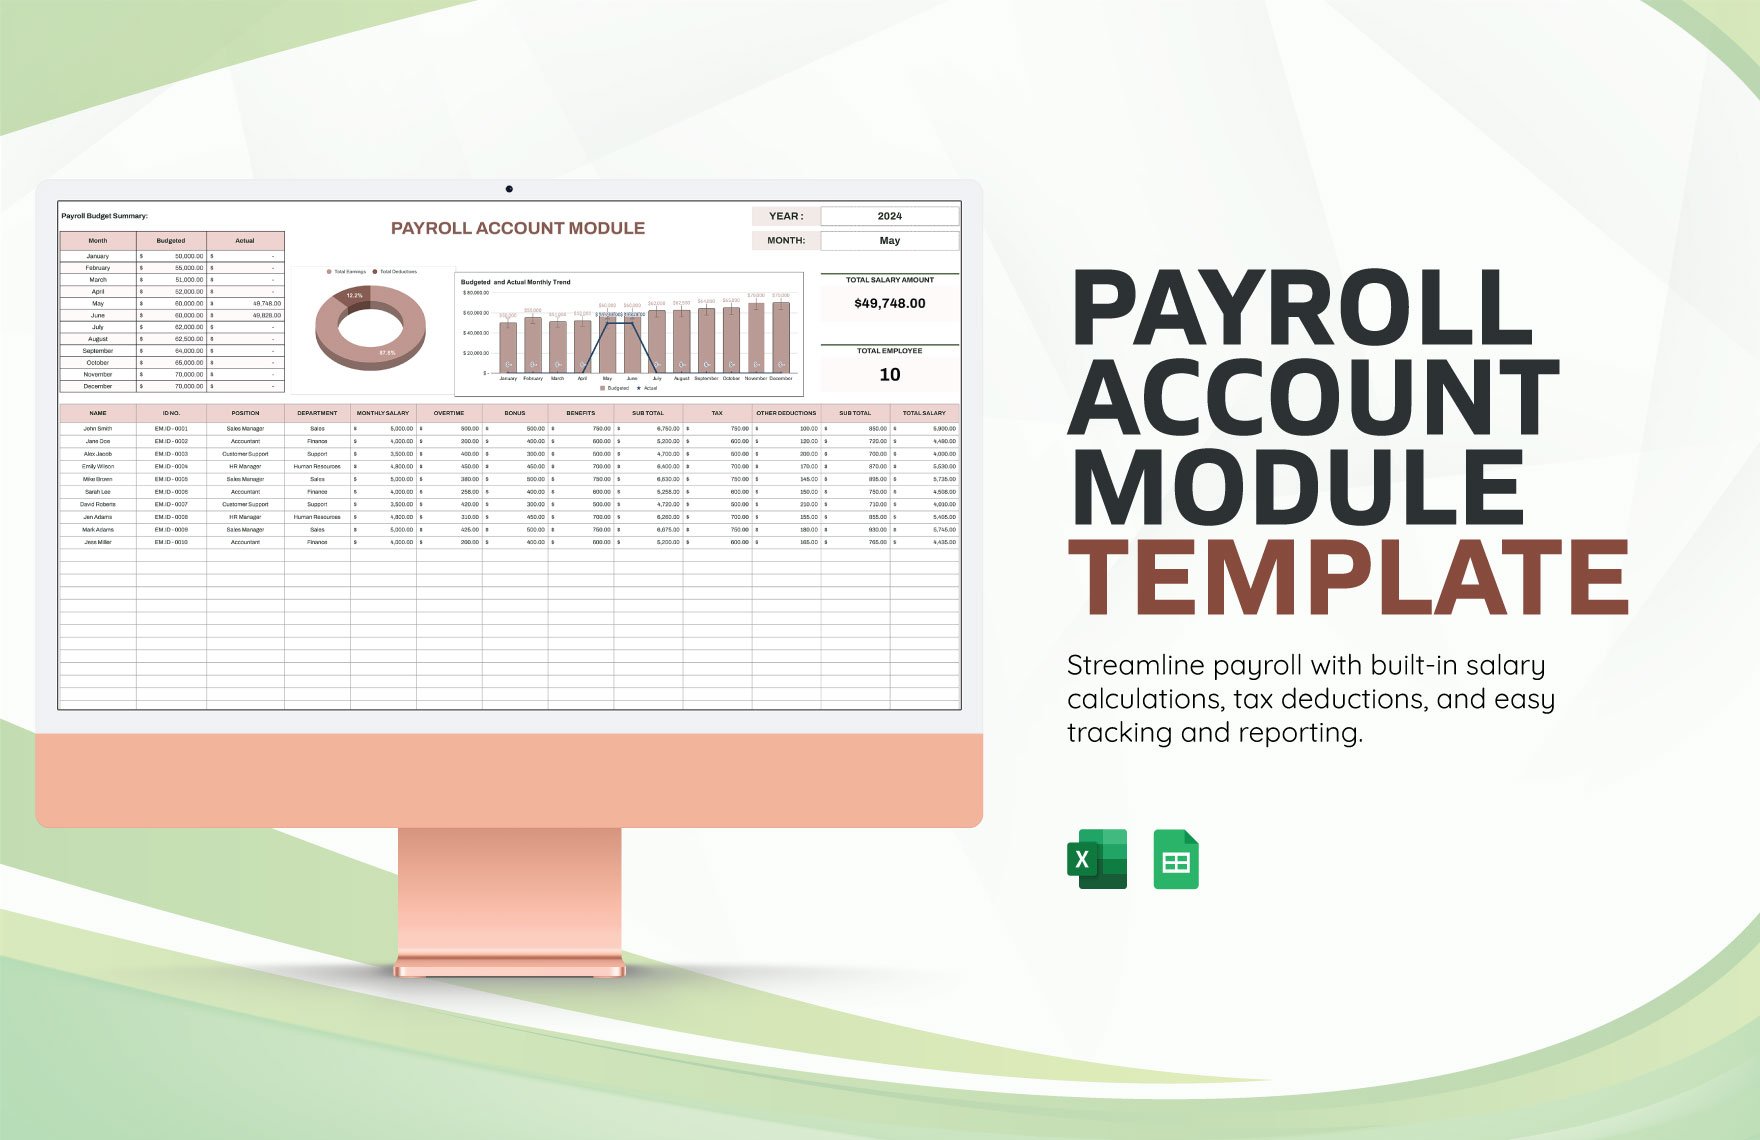 Payroll Account Module Template